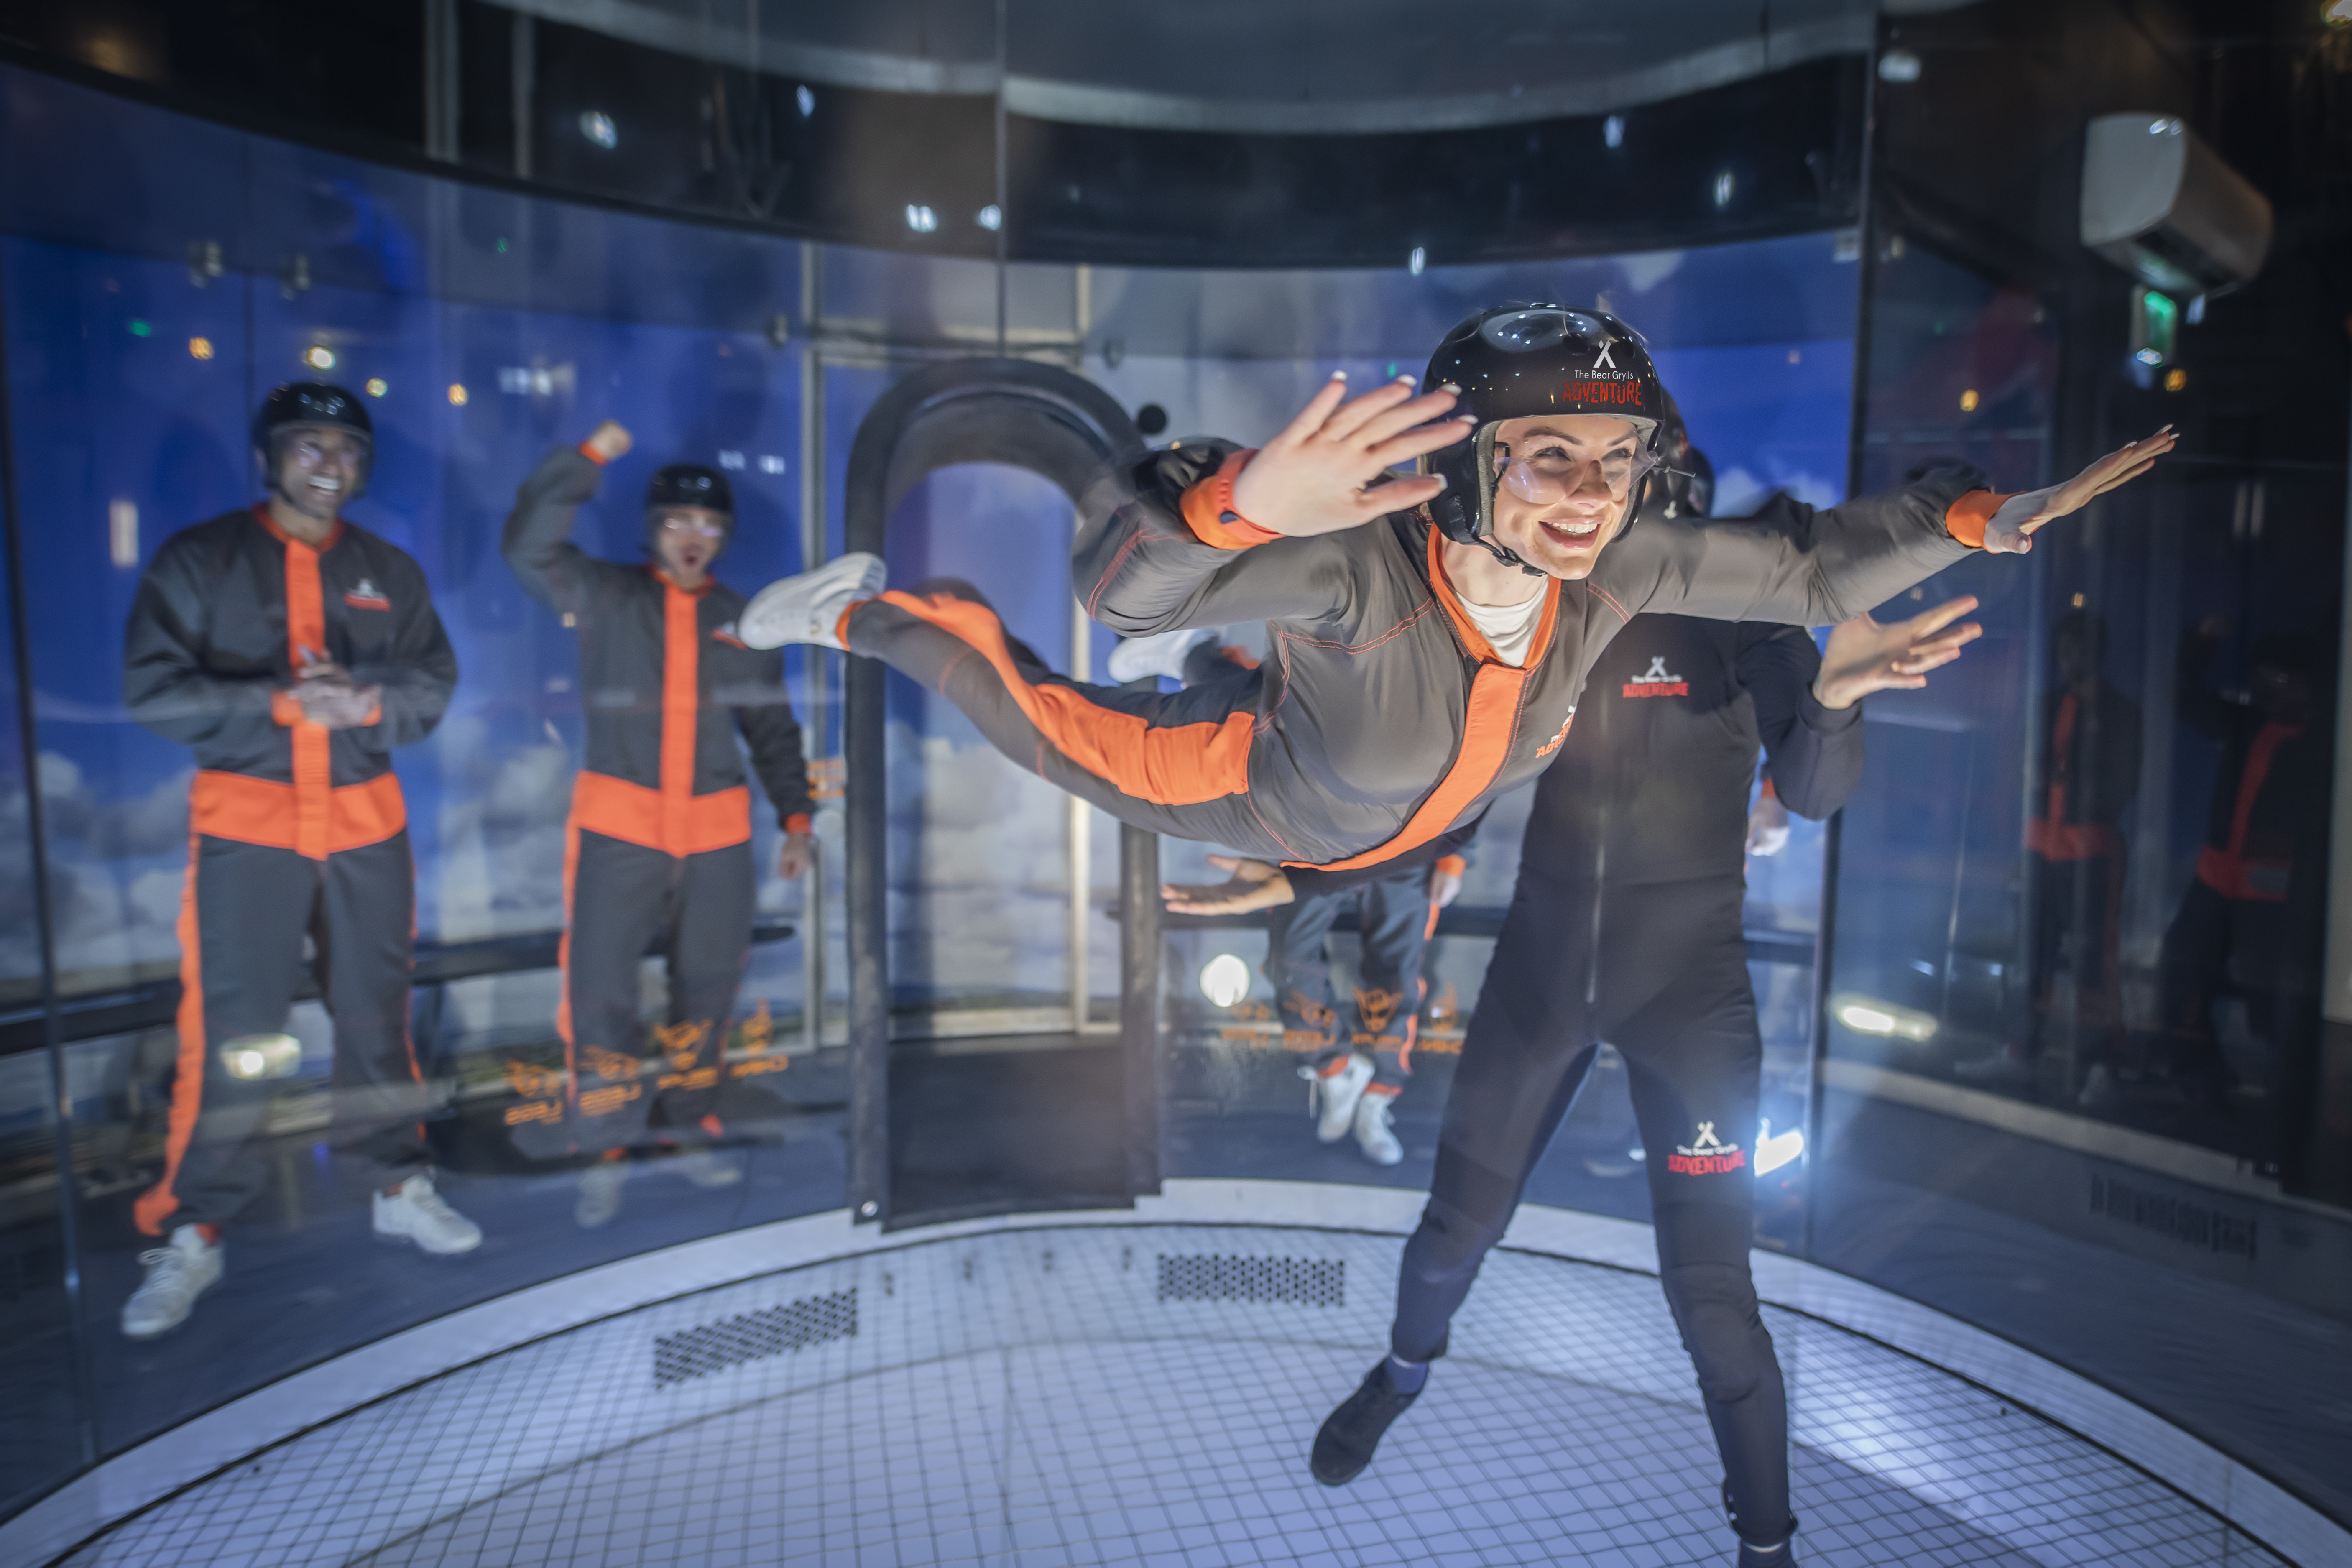 Woman flies in iFLY indoor skydiving tunnel at The Bear Grylls Adventure Birmingham